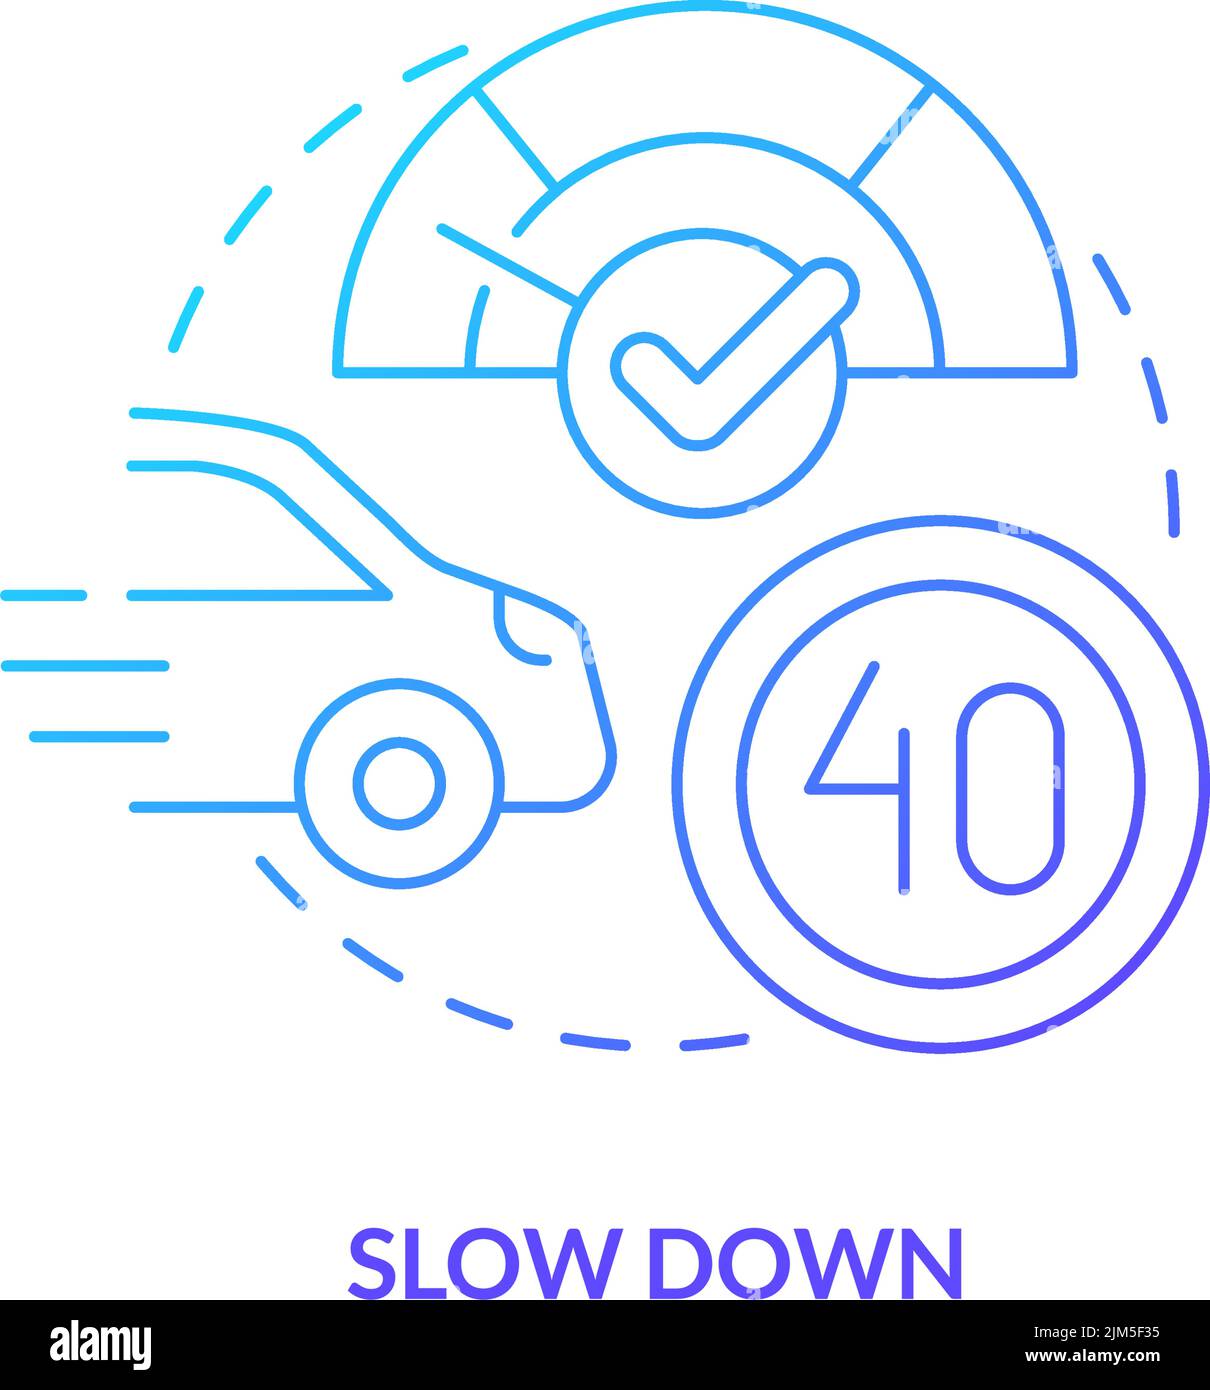 Slow down blue gradient concept icon Stock Vector